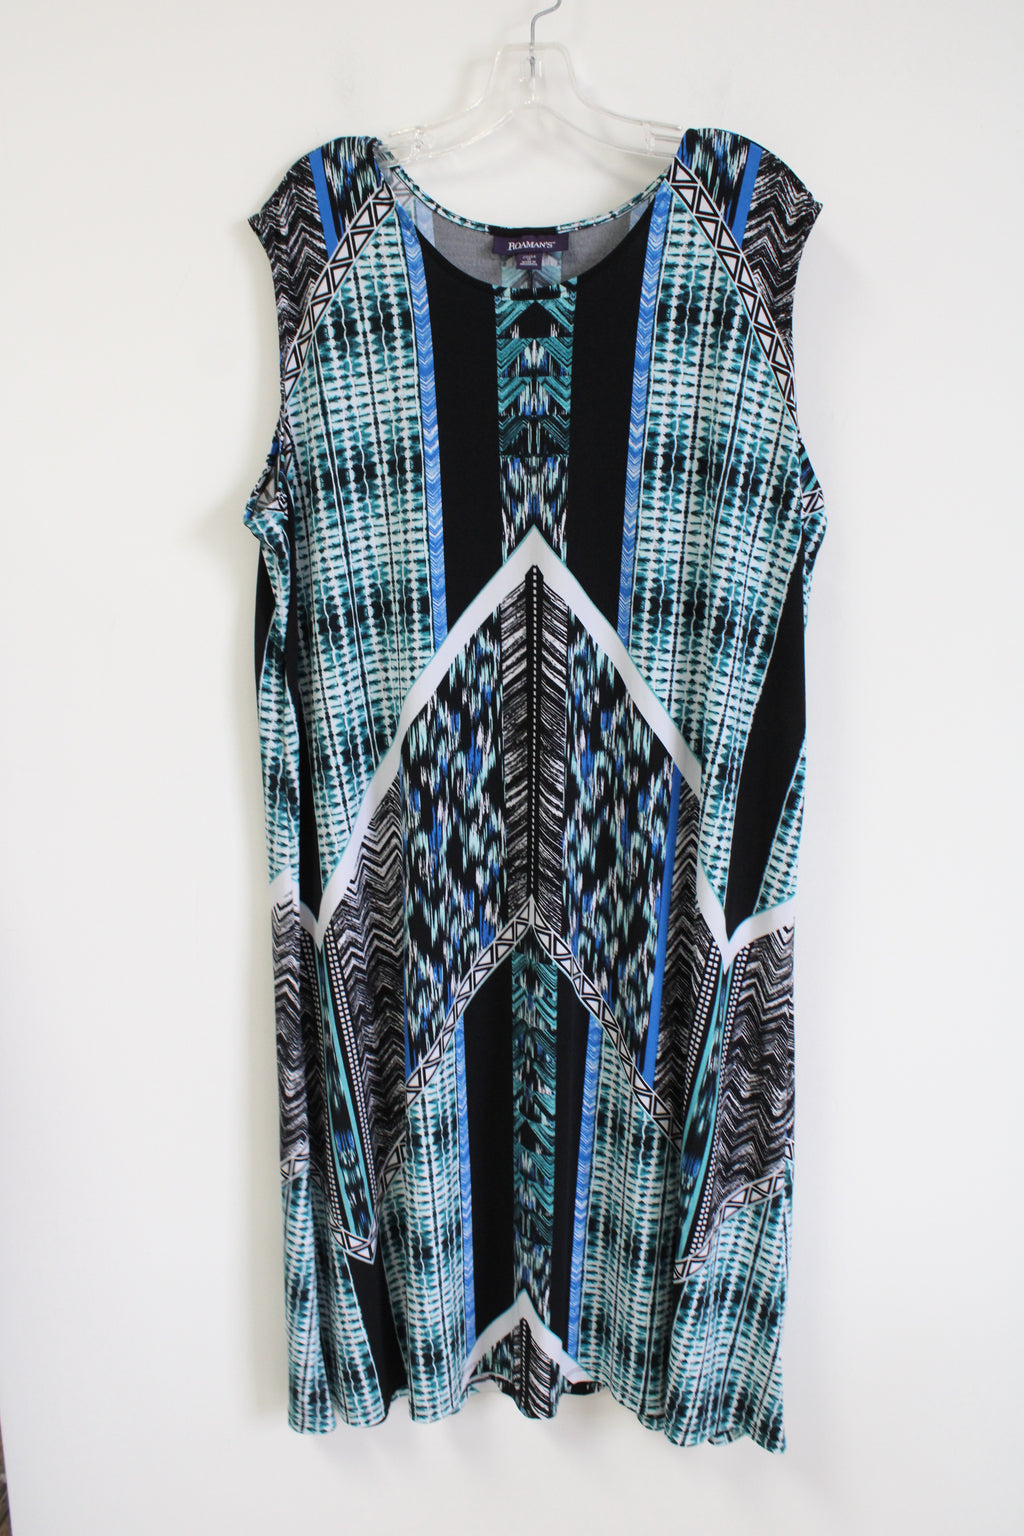 Roaman's Black Blue Patterned Dress | 22/24 (1X)